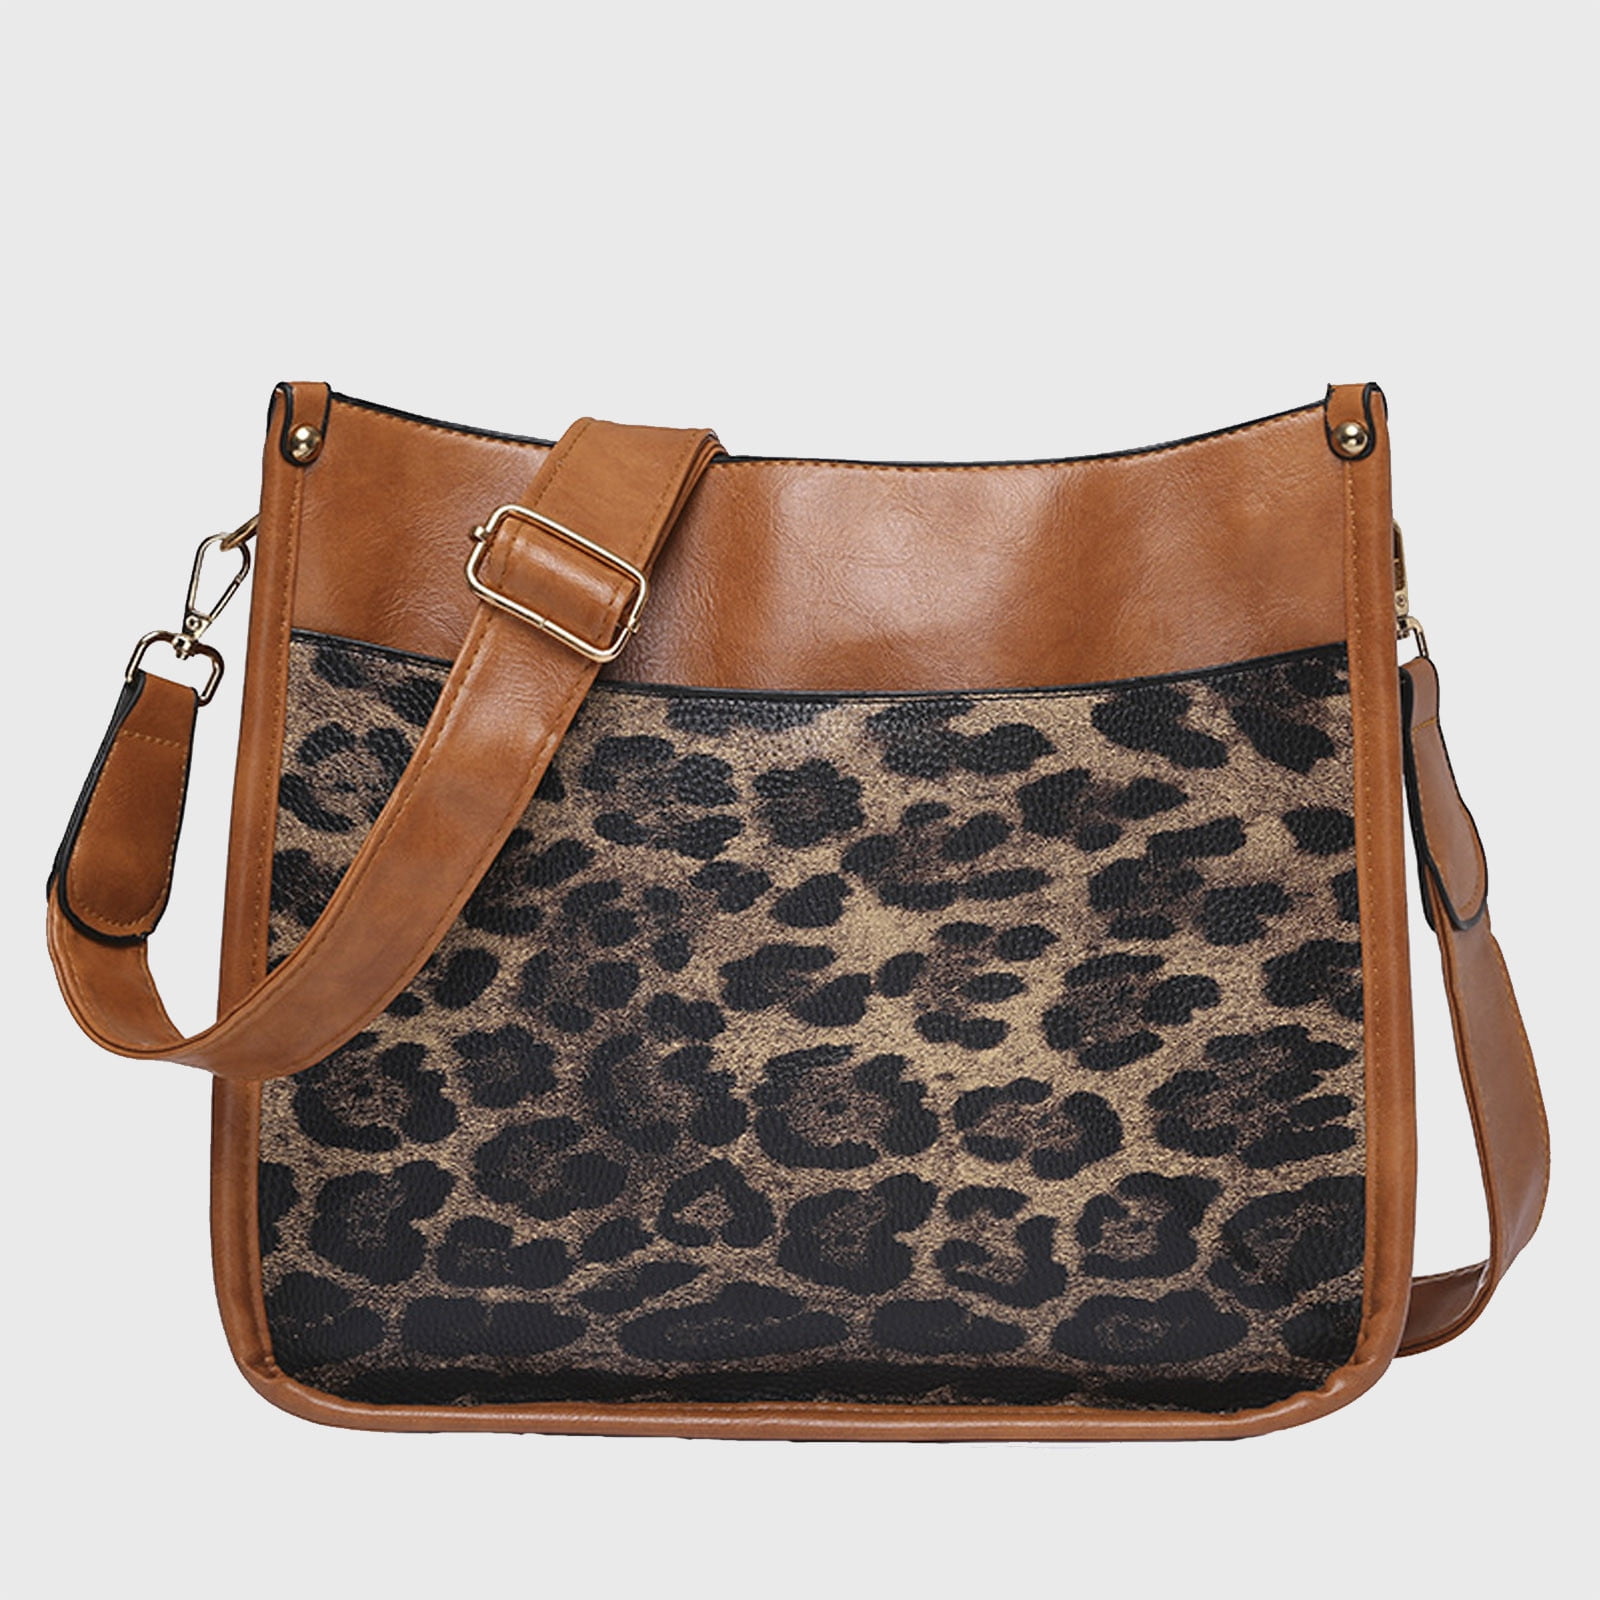 Small shoulder bag - Beige/Leopard print - Ladies | H&M IN